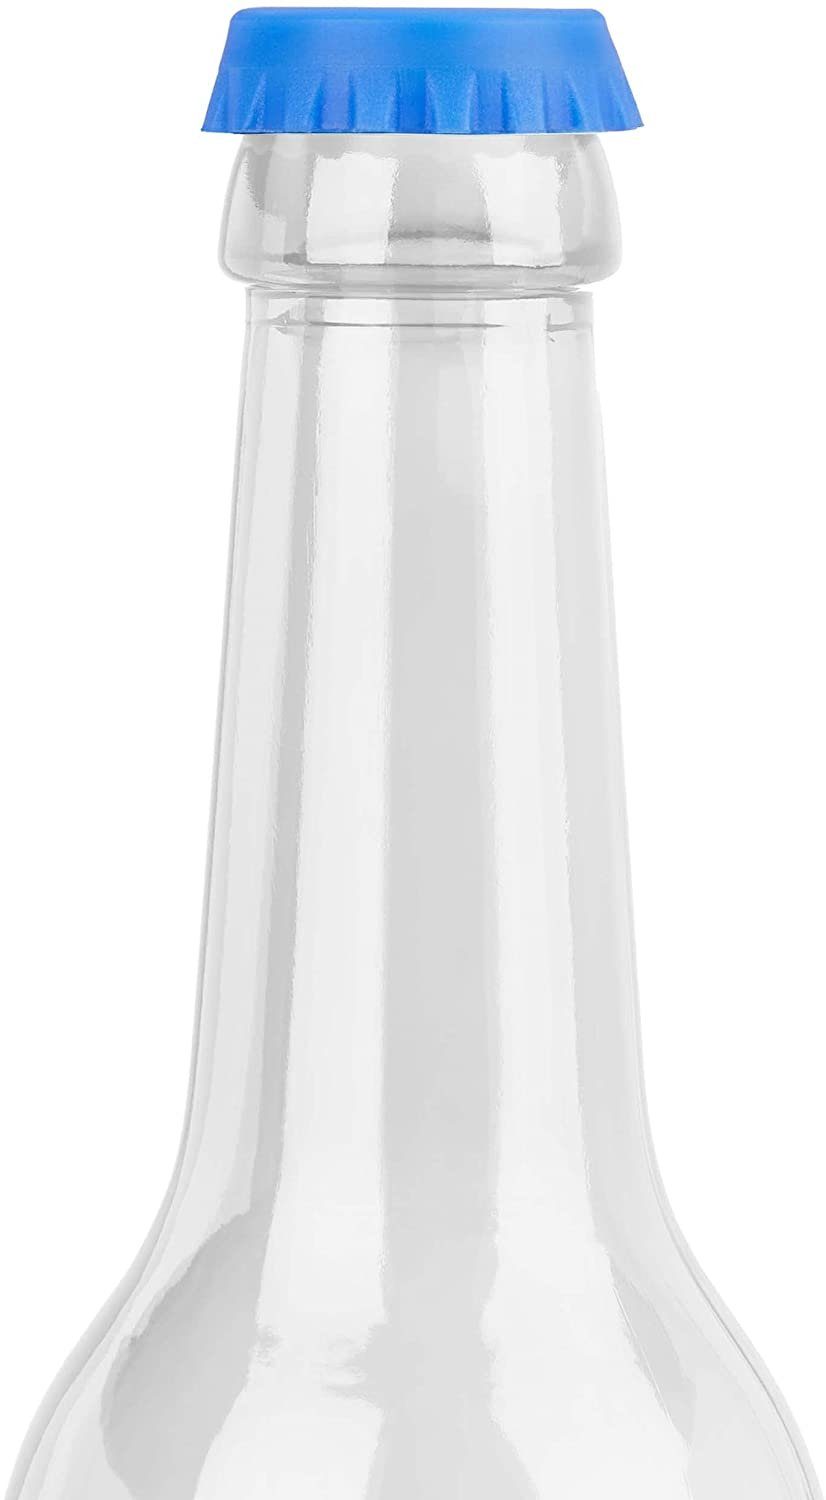 Flaschenverschluss LIVAIA Kronkorken VIELFÄLTIG Silikon Silikon Set, (4er Universal 4-tlg), Bier Verschluss, - & Flaschenverschluss Wein